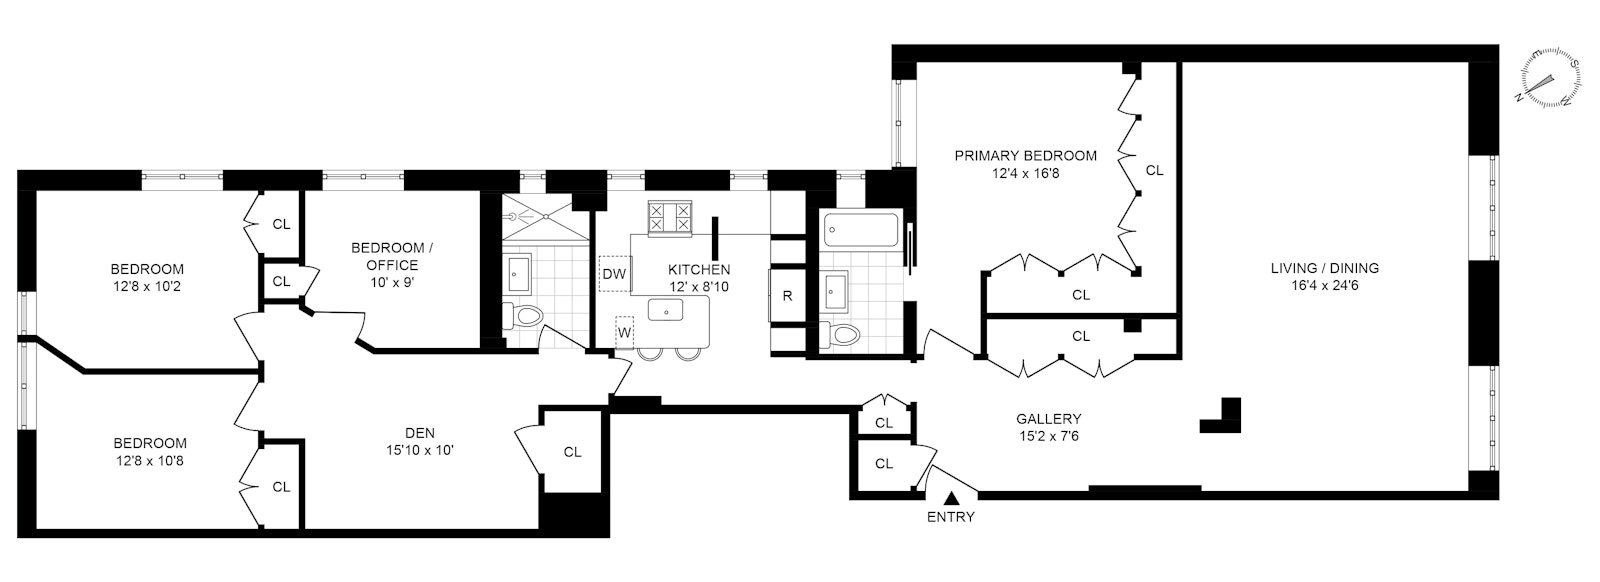 Floorplan for 135 East 39th Street, 1CD